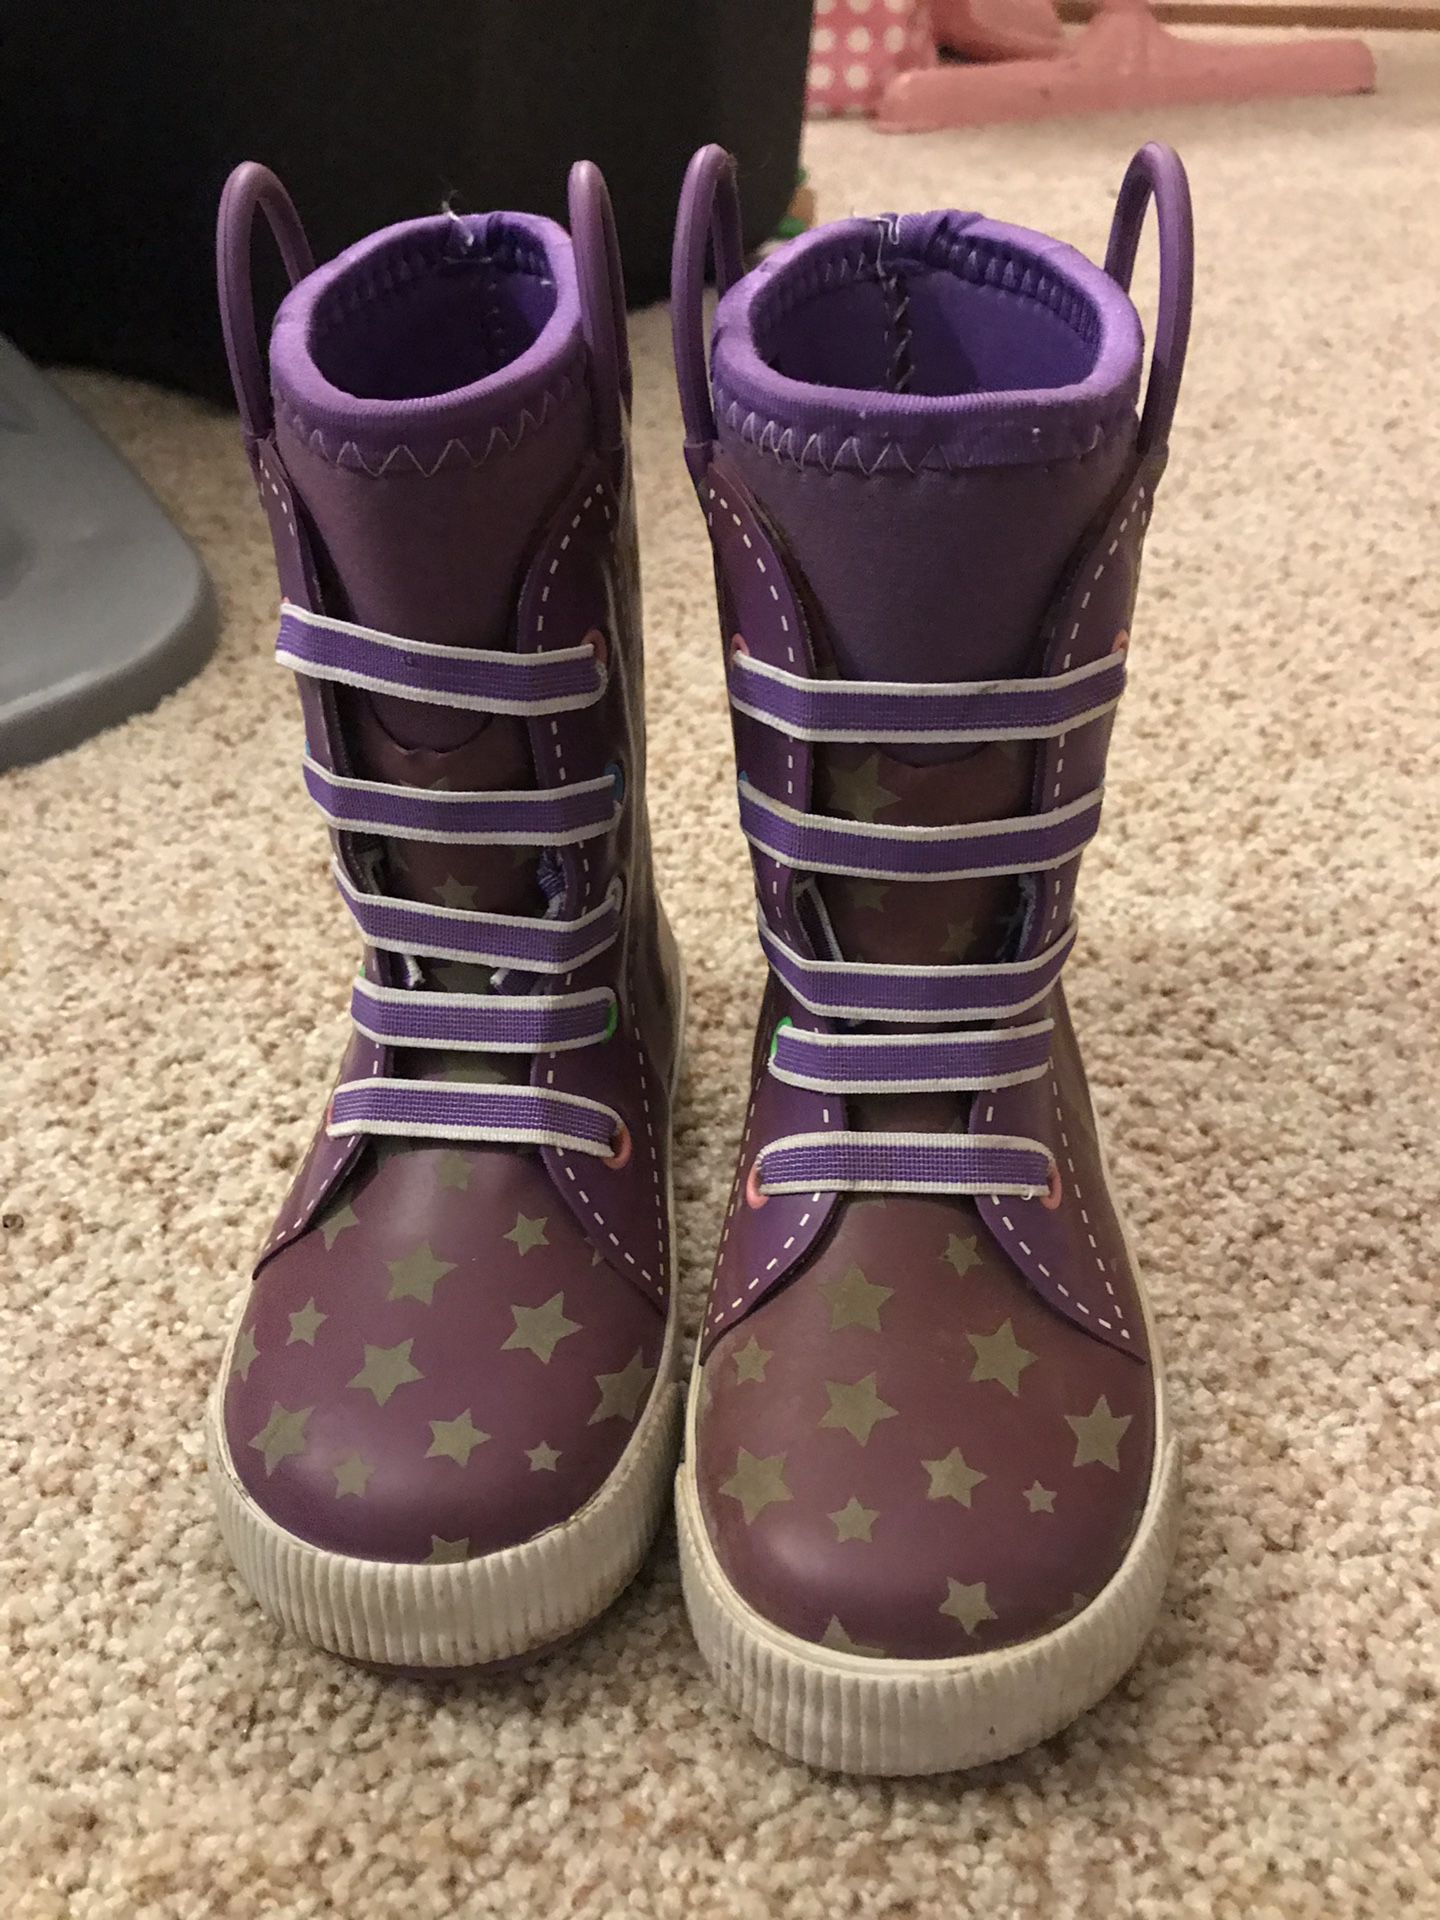 Western Chief size 9/10 girls rain boots